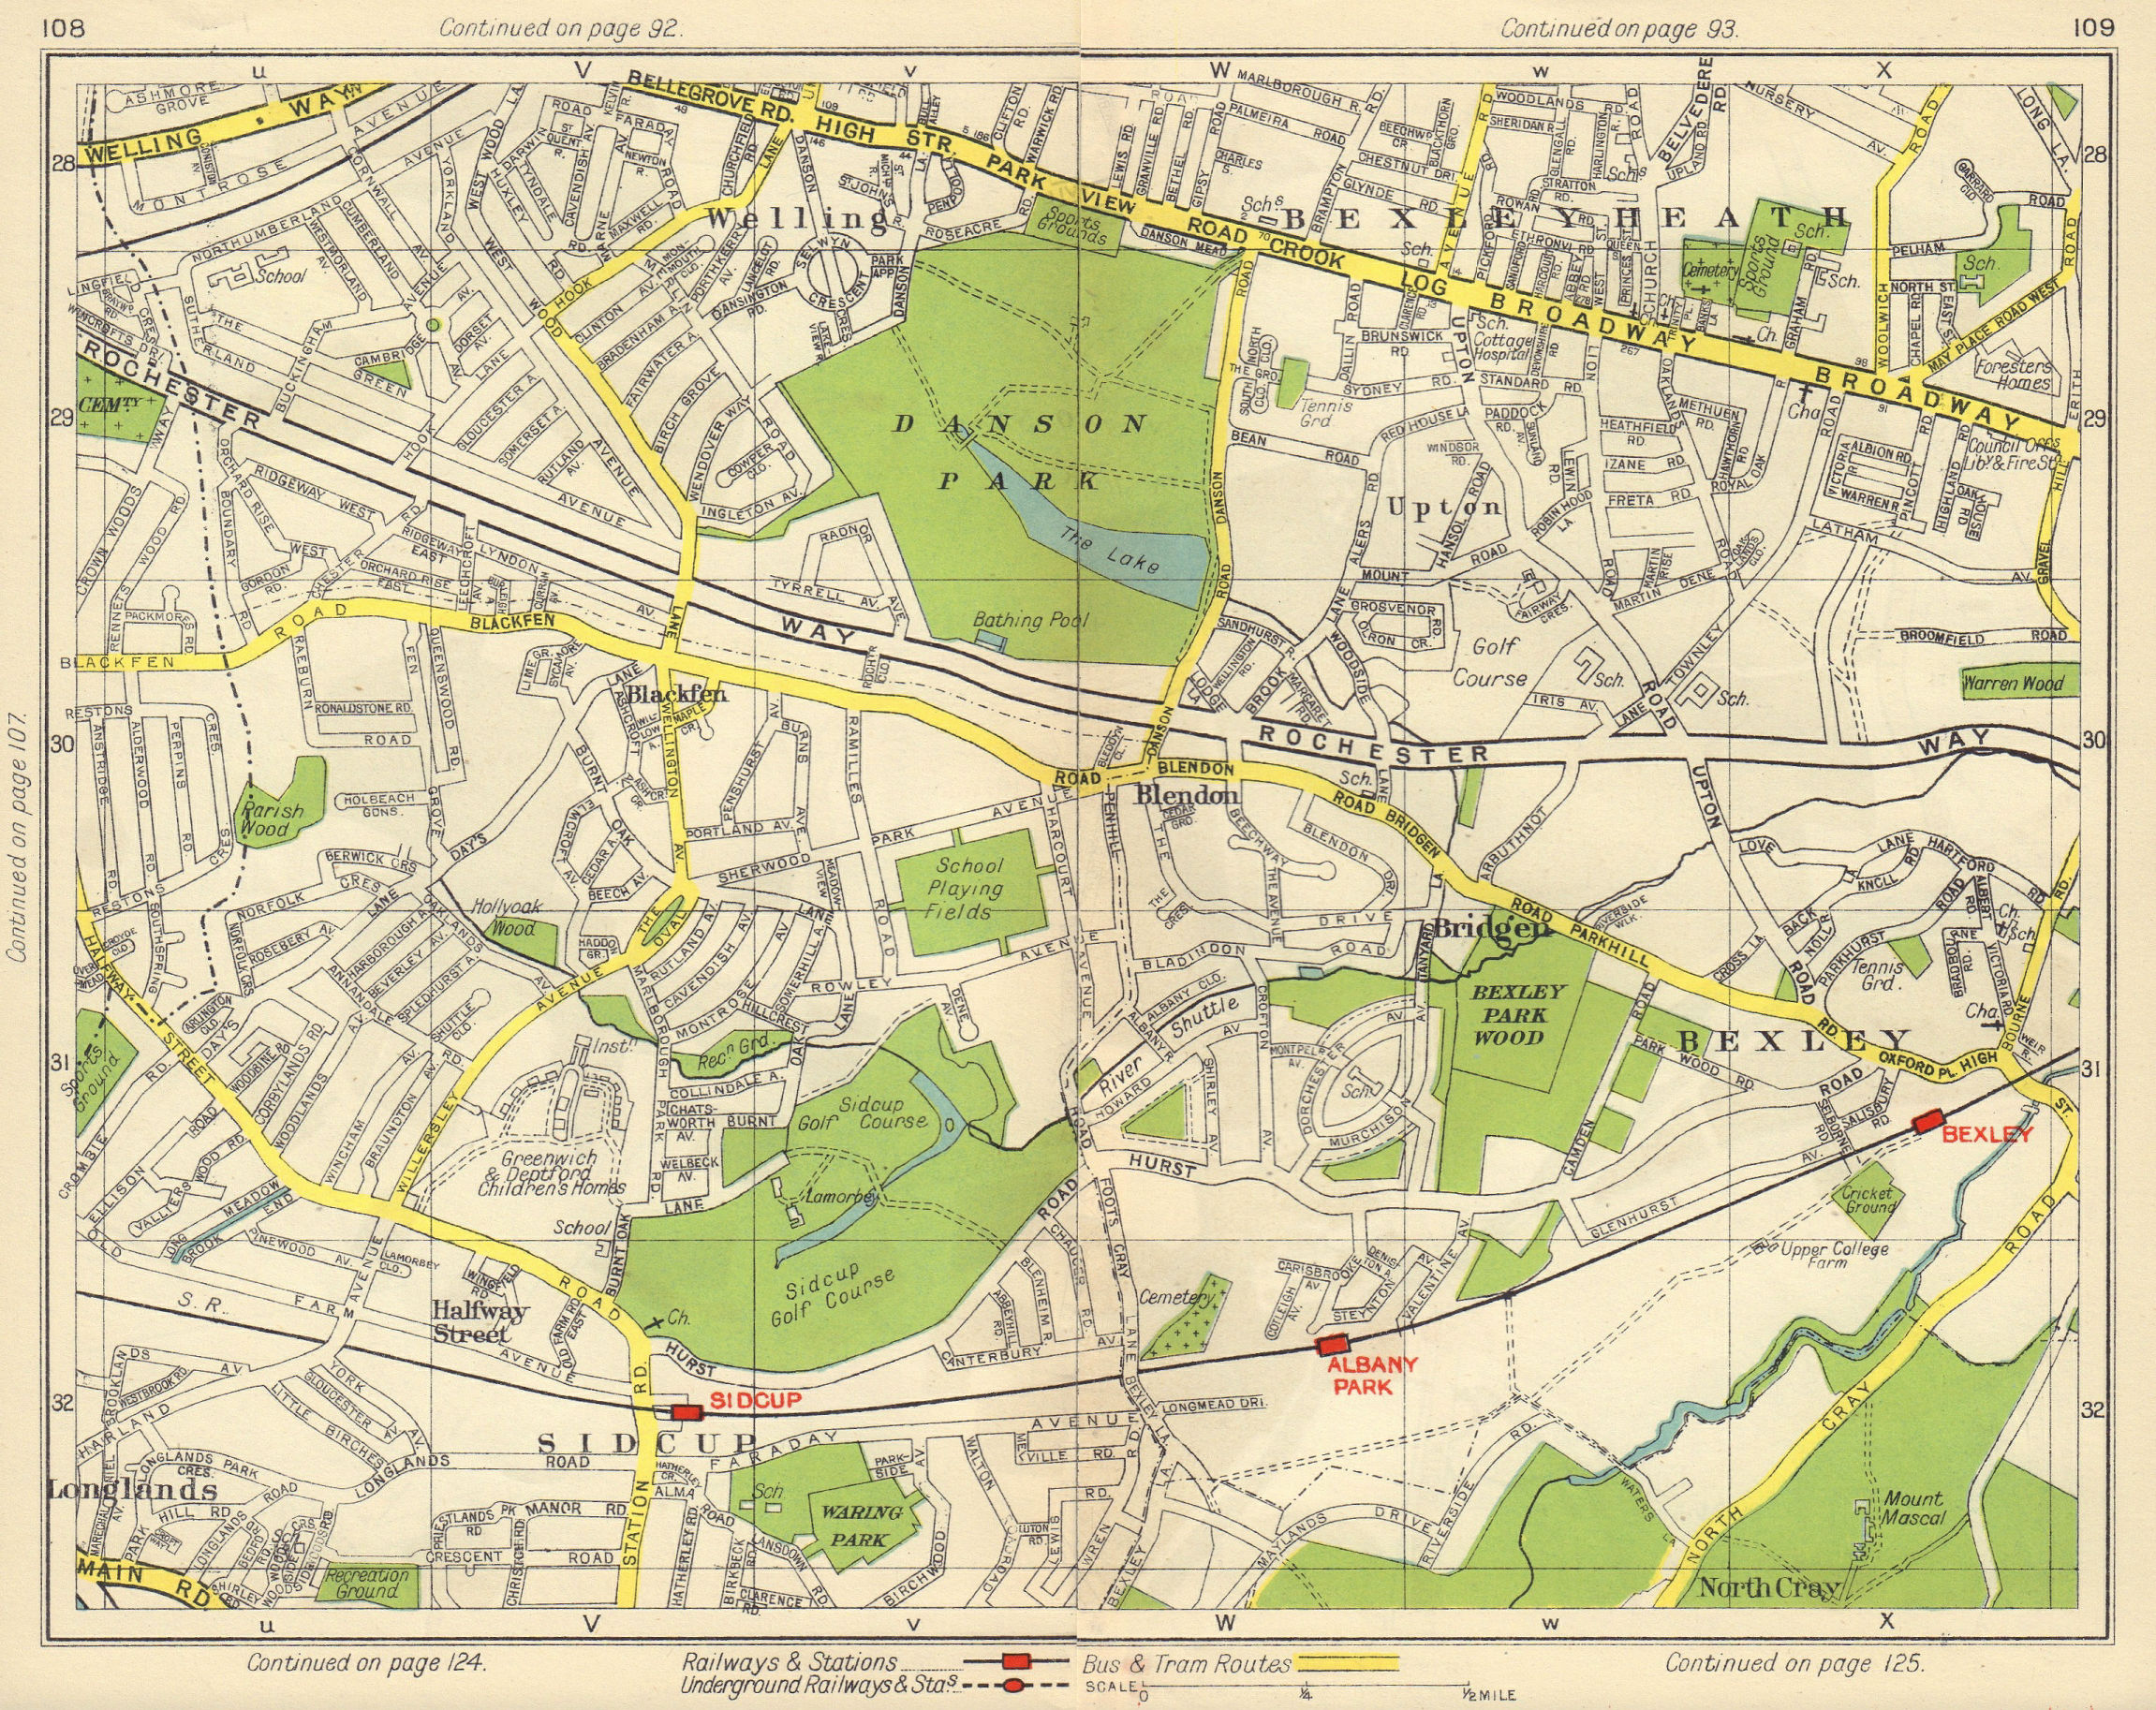 SE LONDON. Blackfen Bexleyheath Blendon Albany Park Bexley North Cray 1948 map